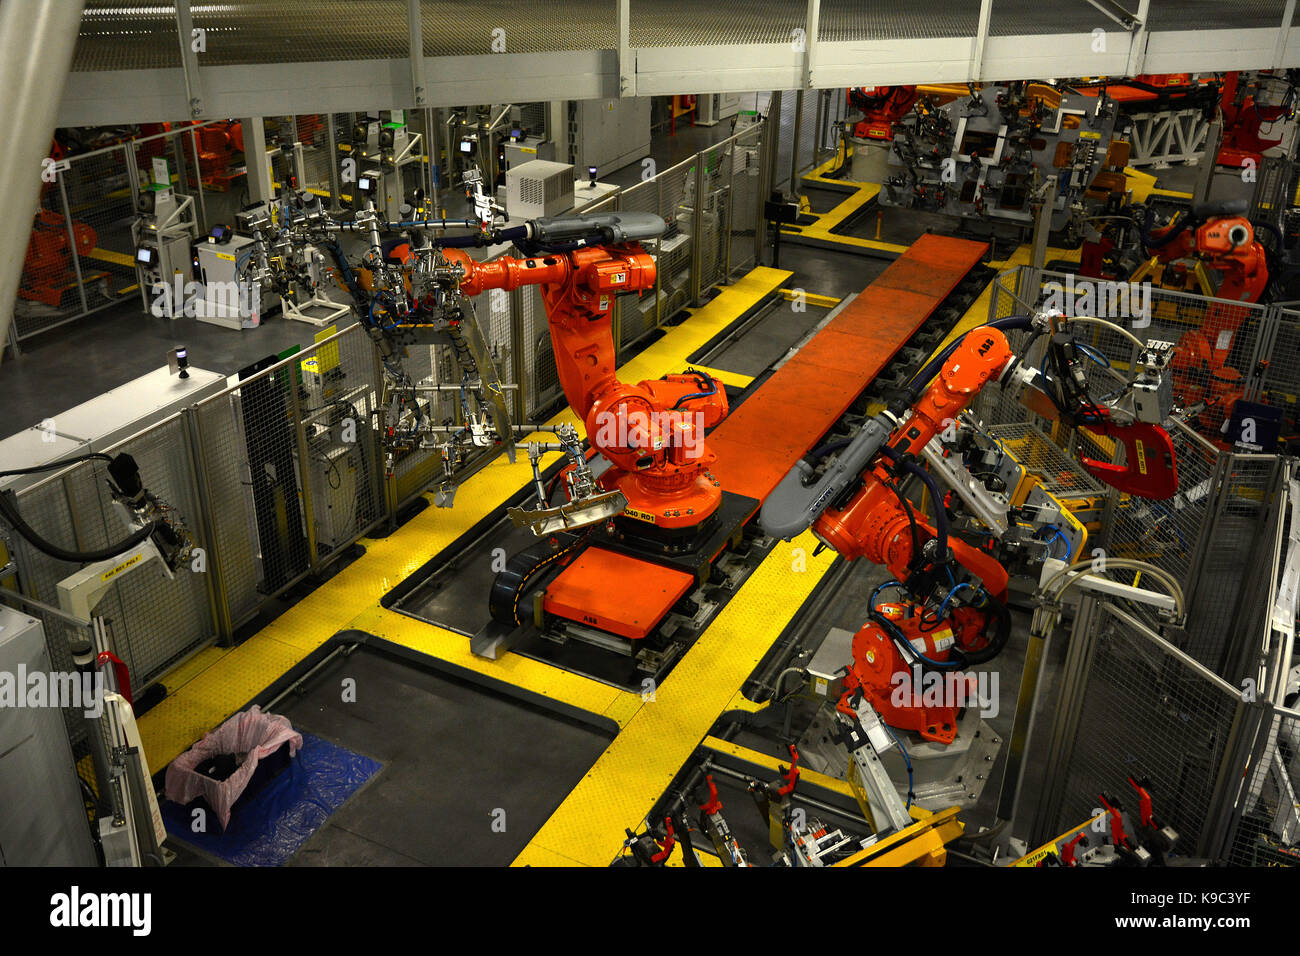 Robots working on aluminium cars at Jaguar Land Rover, Lode Lane, Solihull, West Midlands,UK. Stock Photo